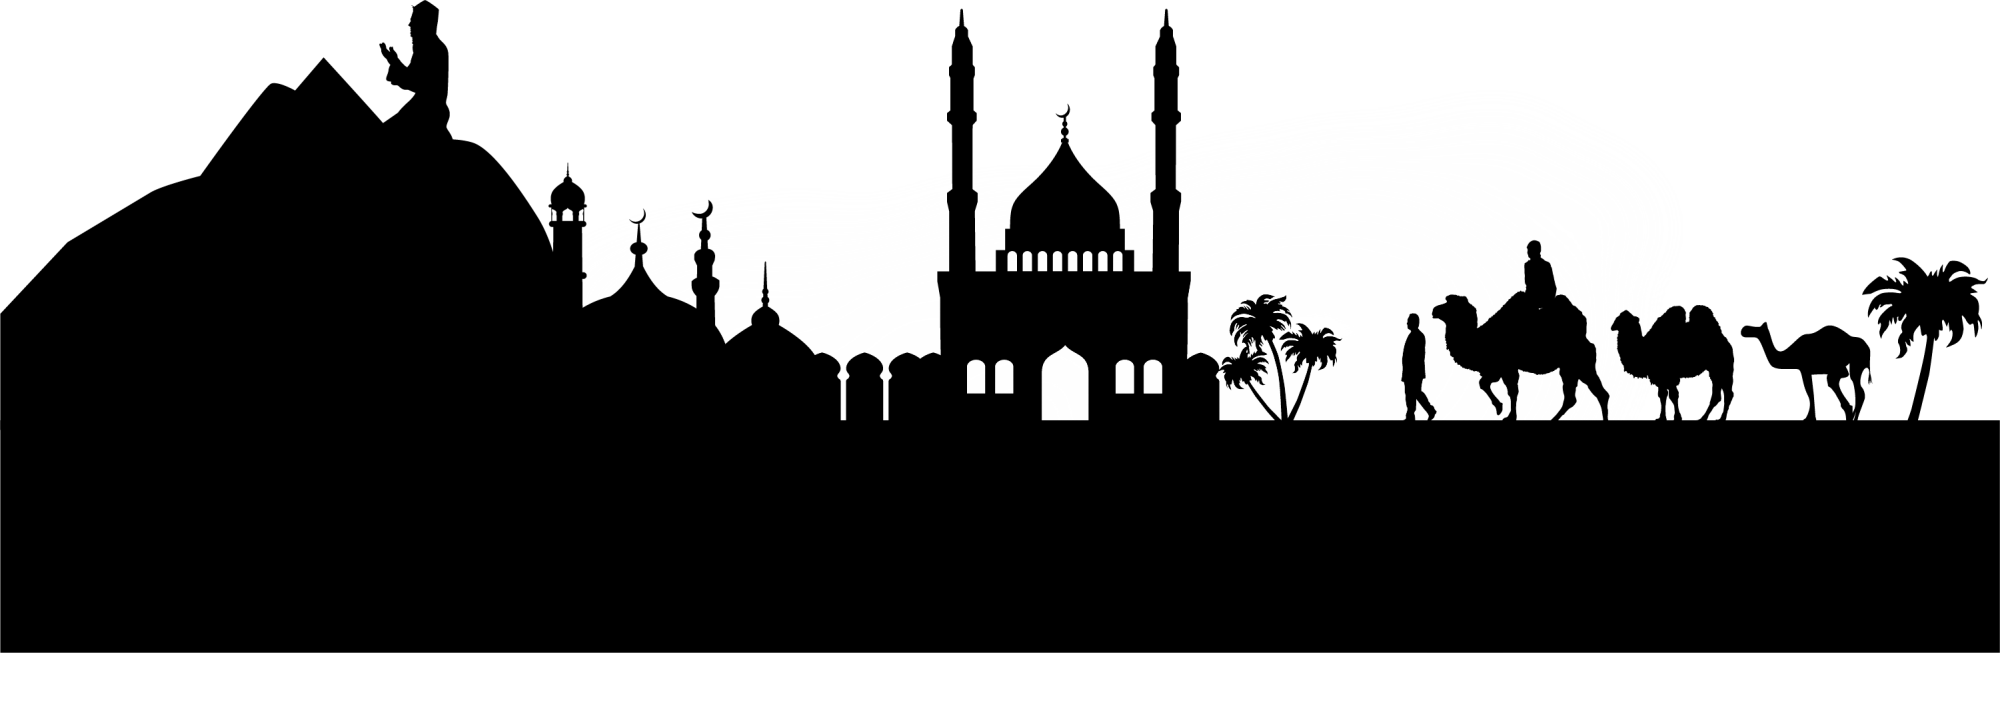 mosque clipart arabic mosque